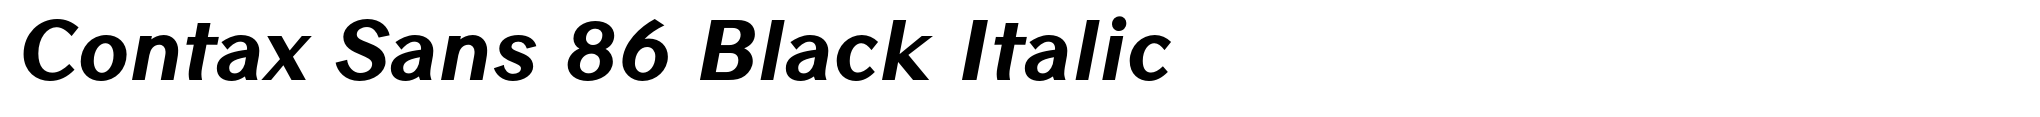 Contax Sans 86 Black Italic image